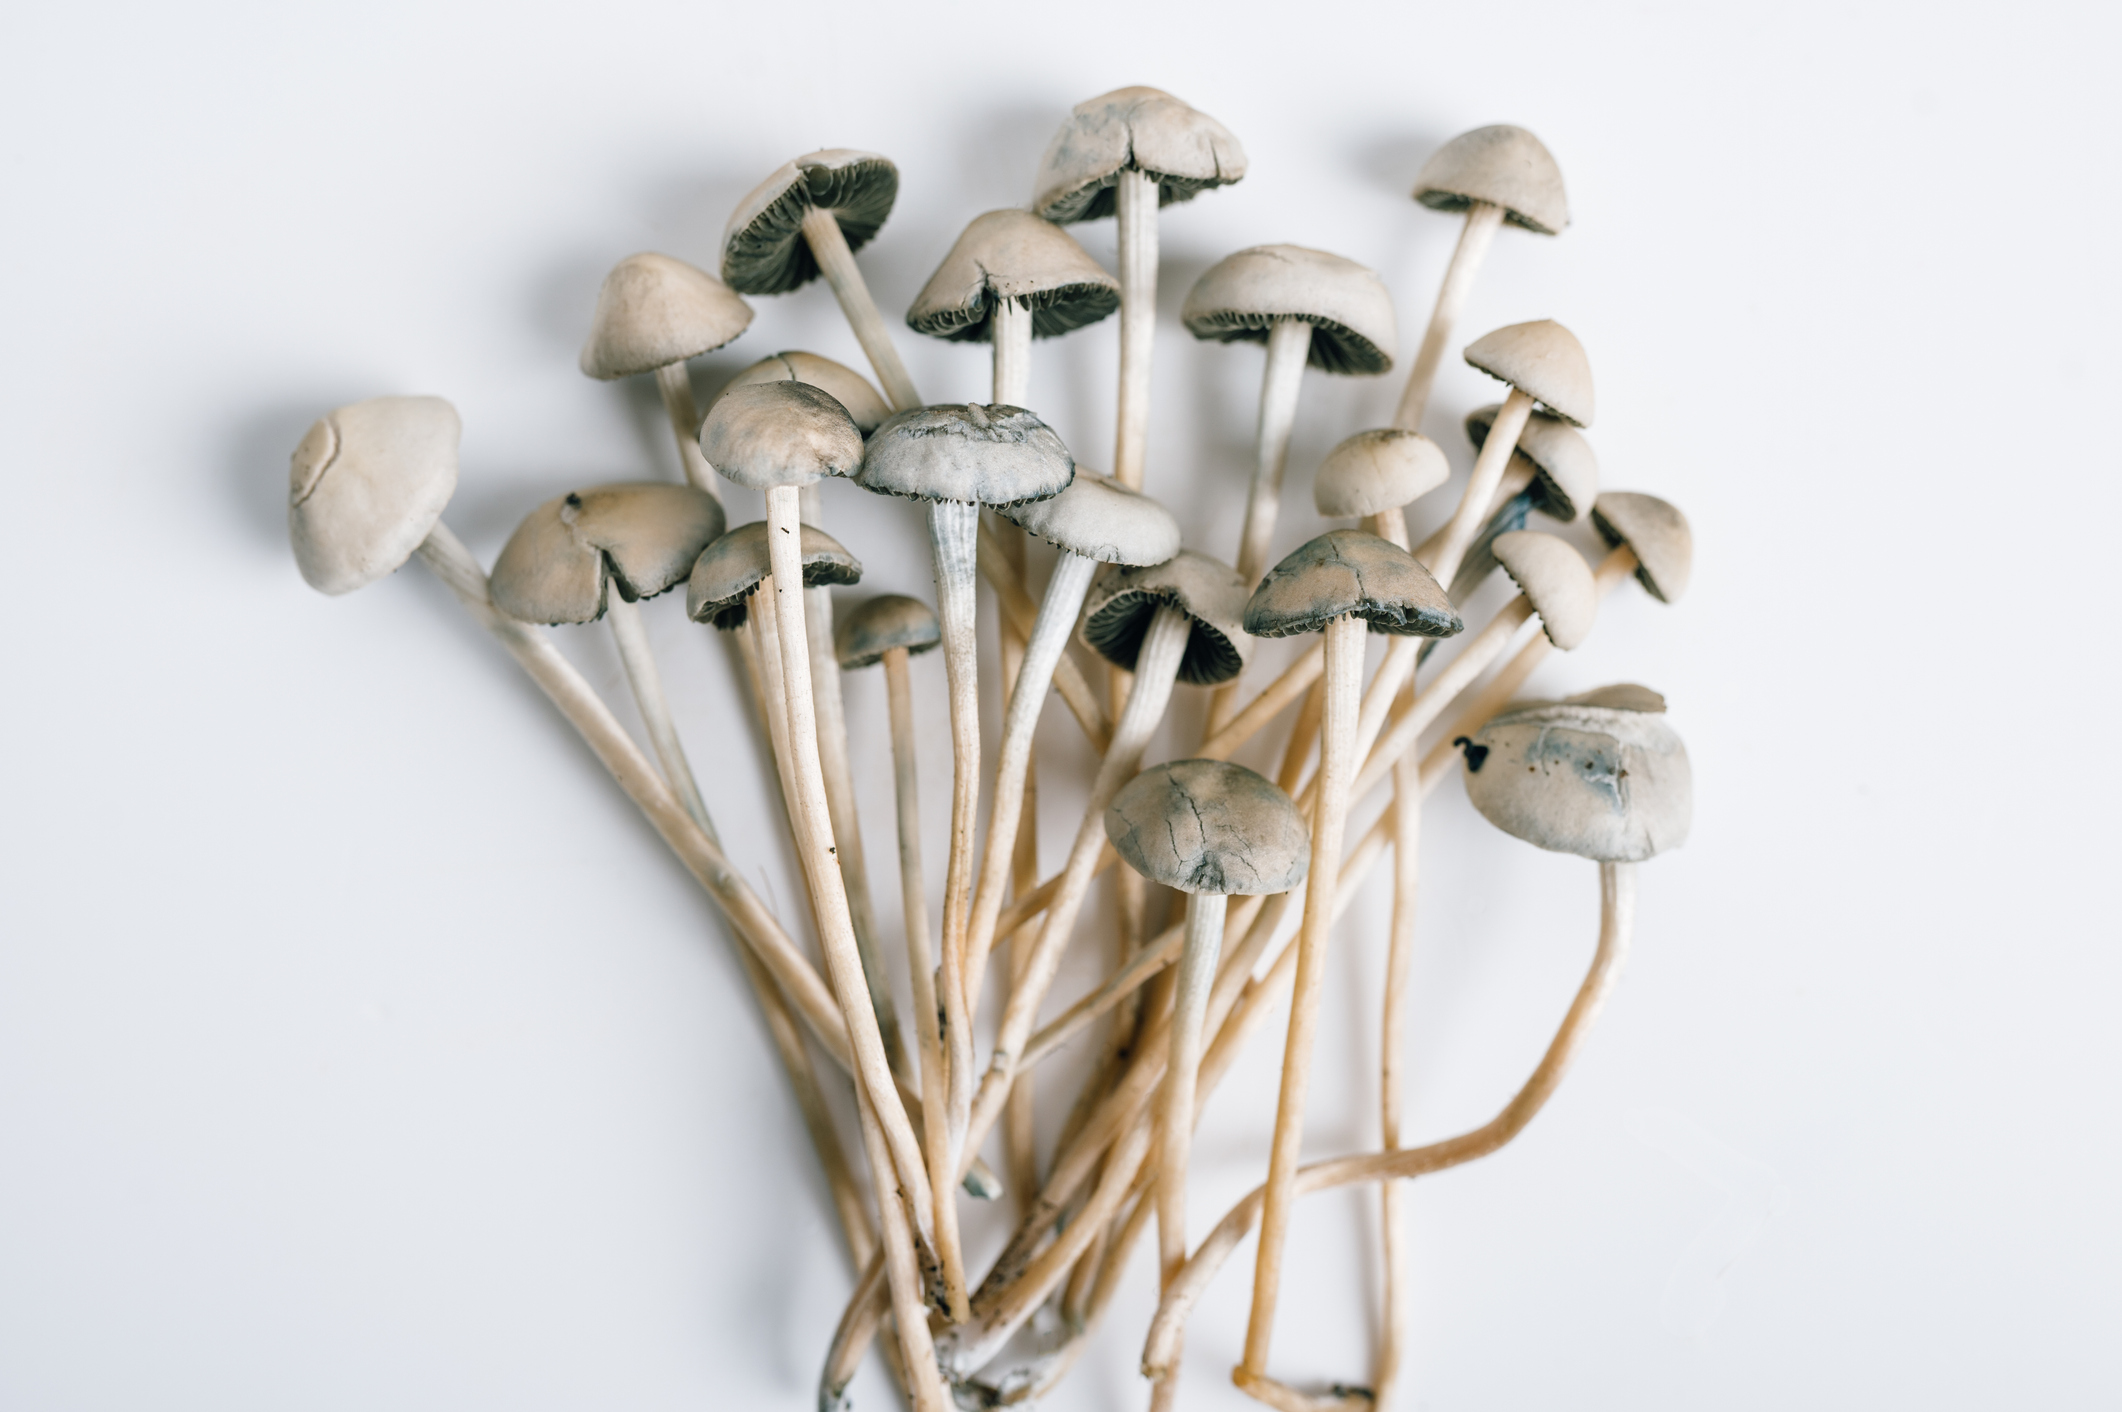 Copelandia Mushroom Panaeolus Cyanescens or Copelandia Cyanescens is one of the most potent mushrooms in the world